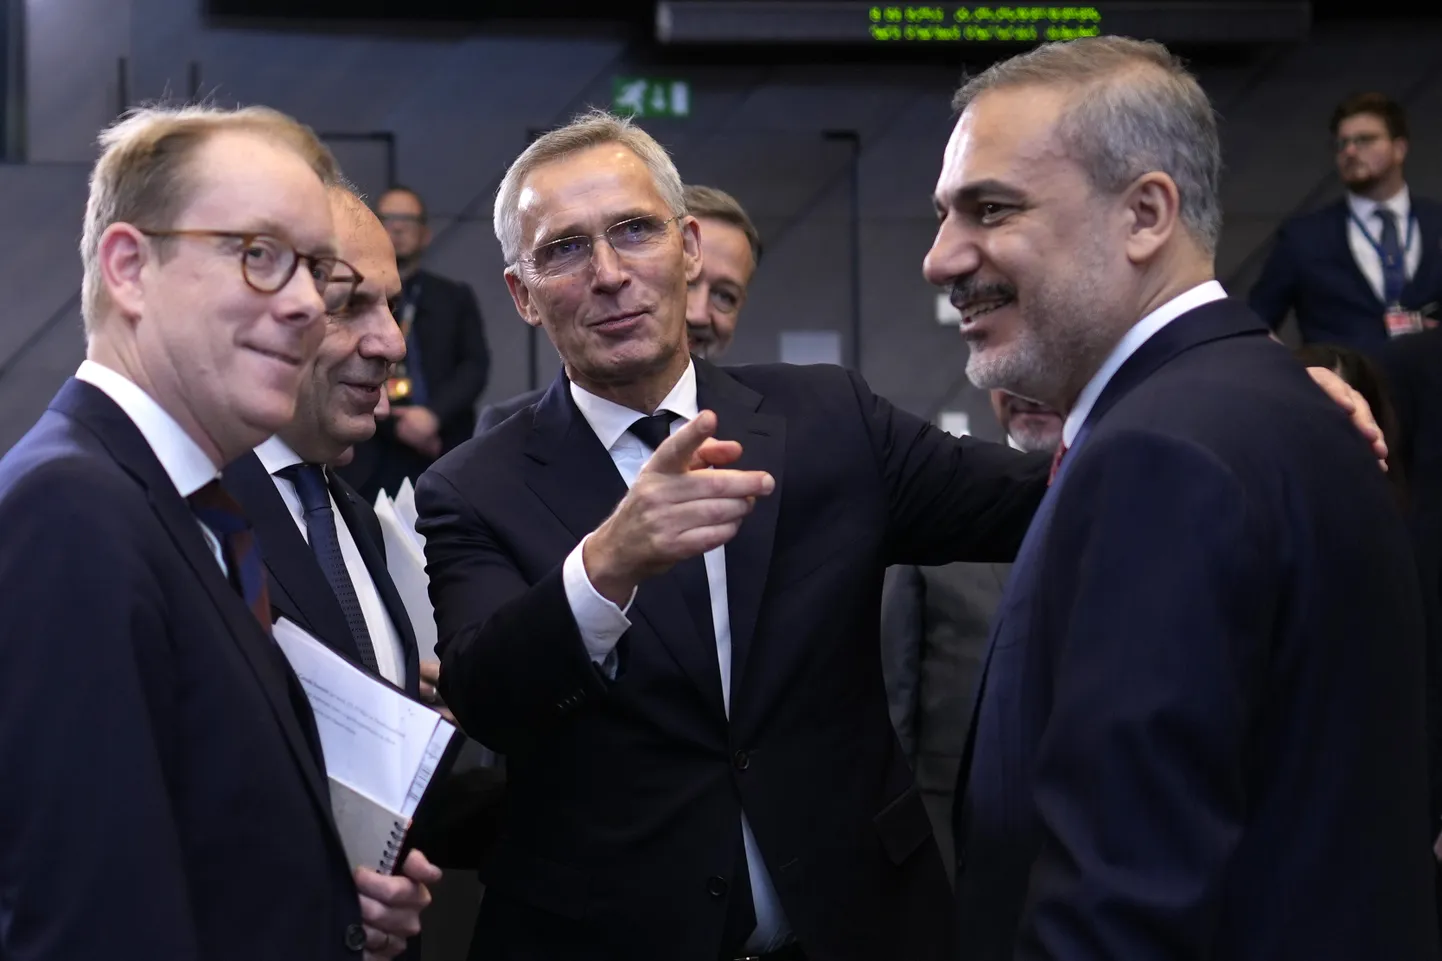 NATO peasekretär Jens Stoltenberg (keskel), Rootsi välisminister Tobias Billström (vasakul) ja Türgi välisminister Hakan Fidan (paremal) mullu novembri lõpus NATO peakorteris.